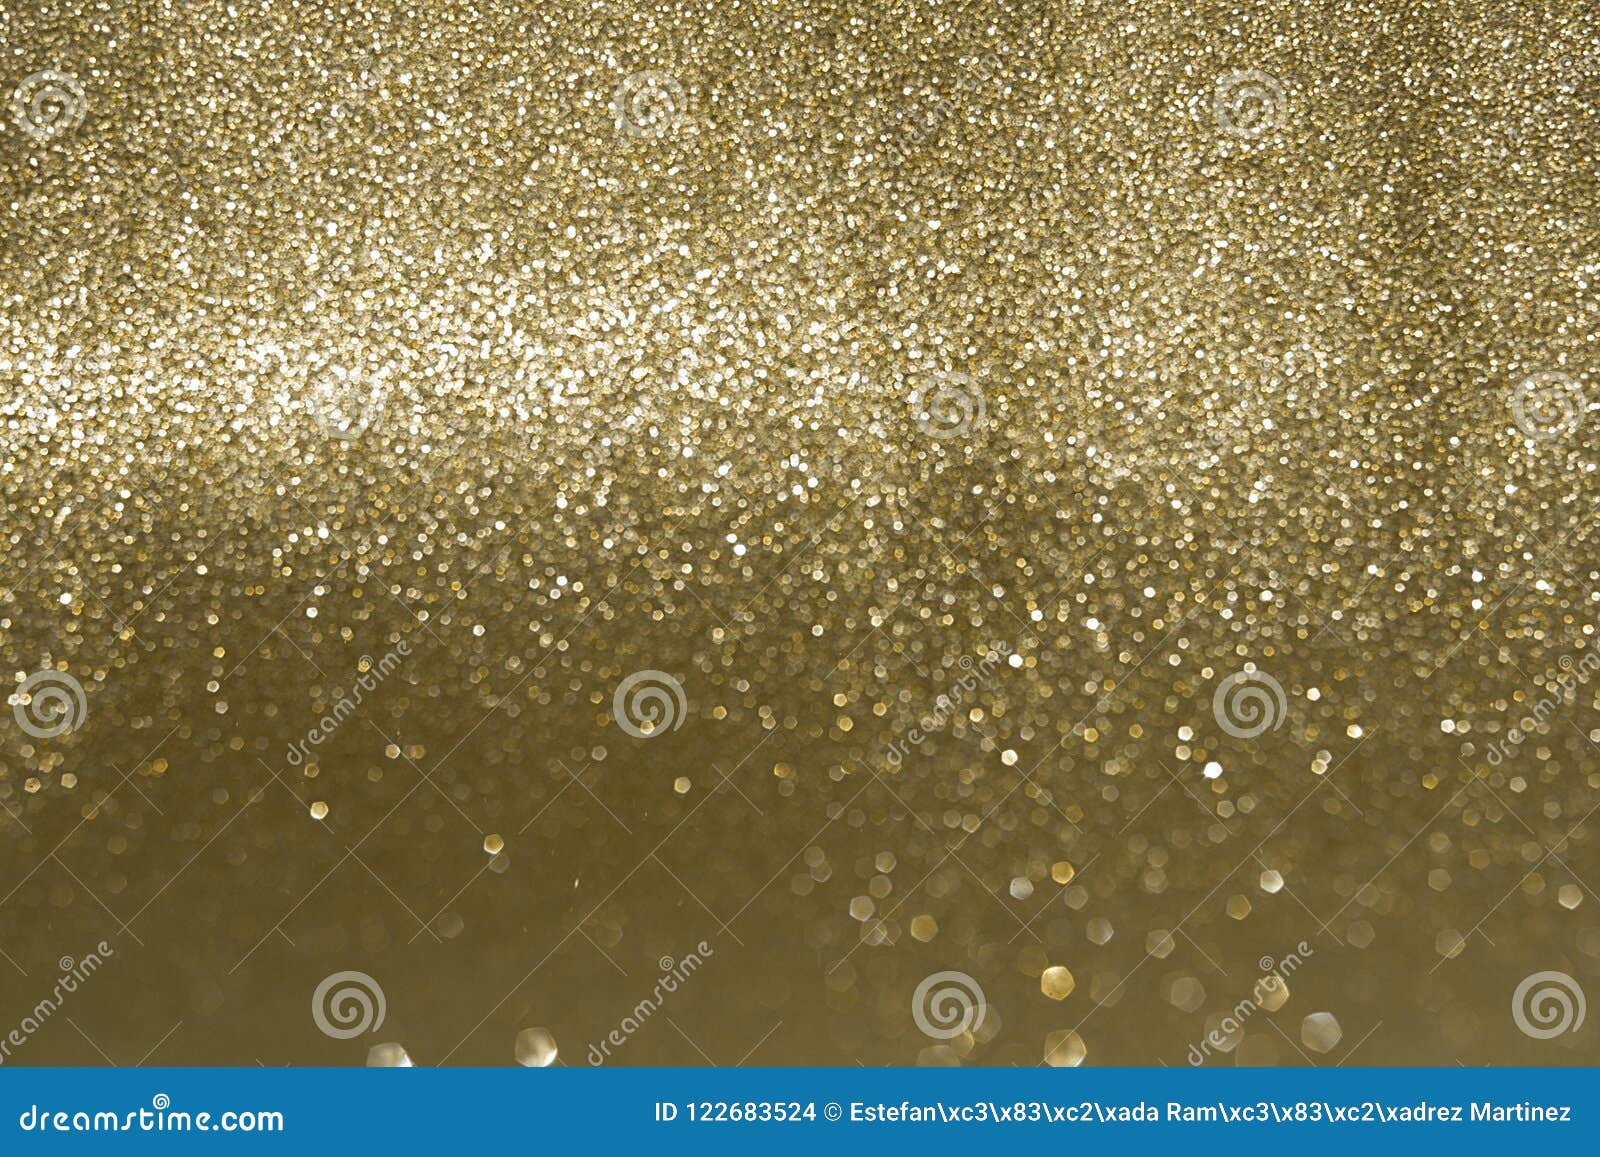 sparkly glitter, golden background bokeh effect